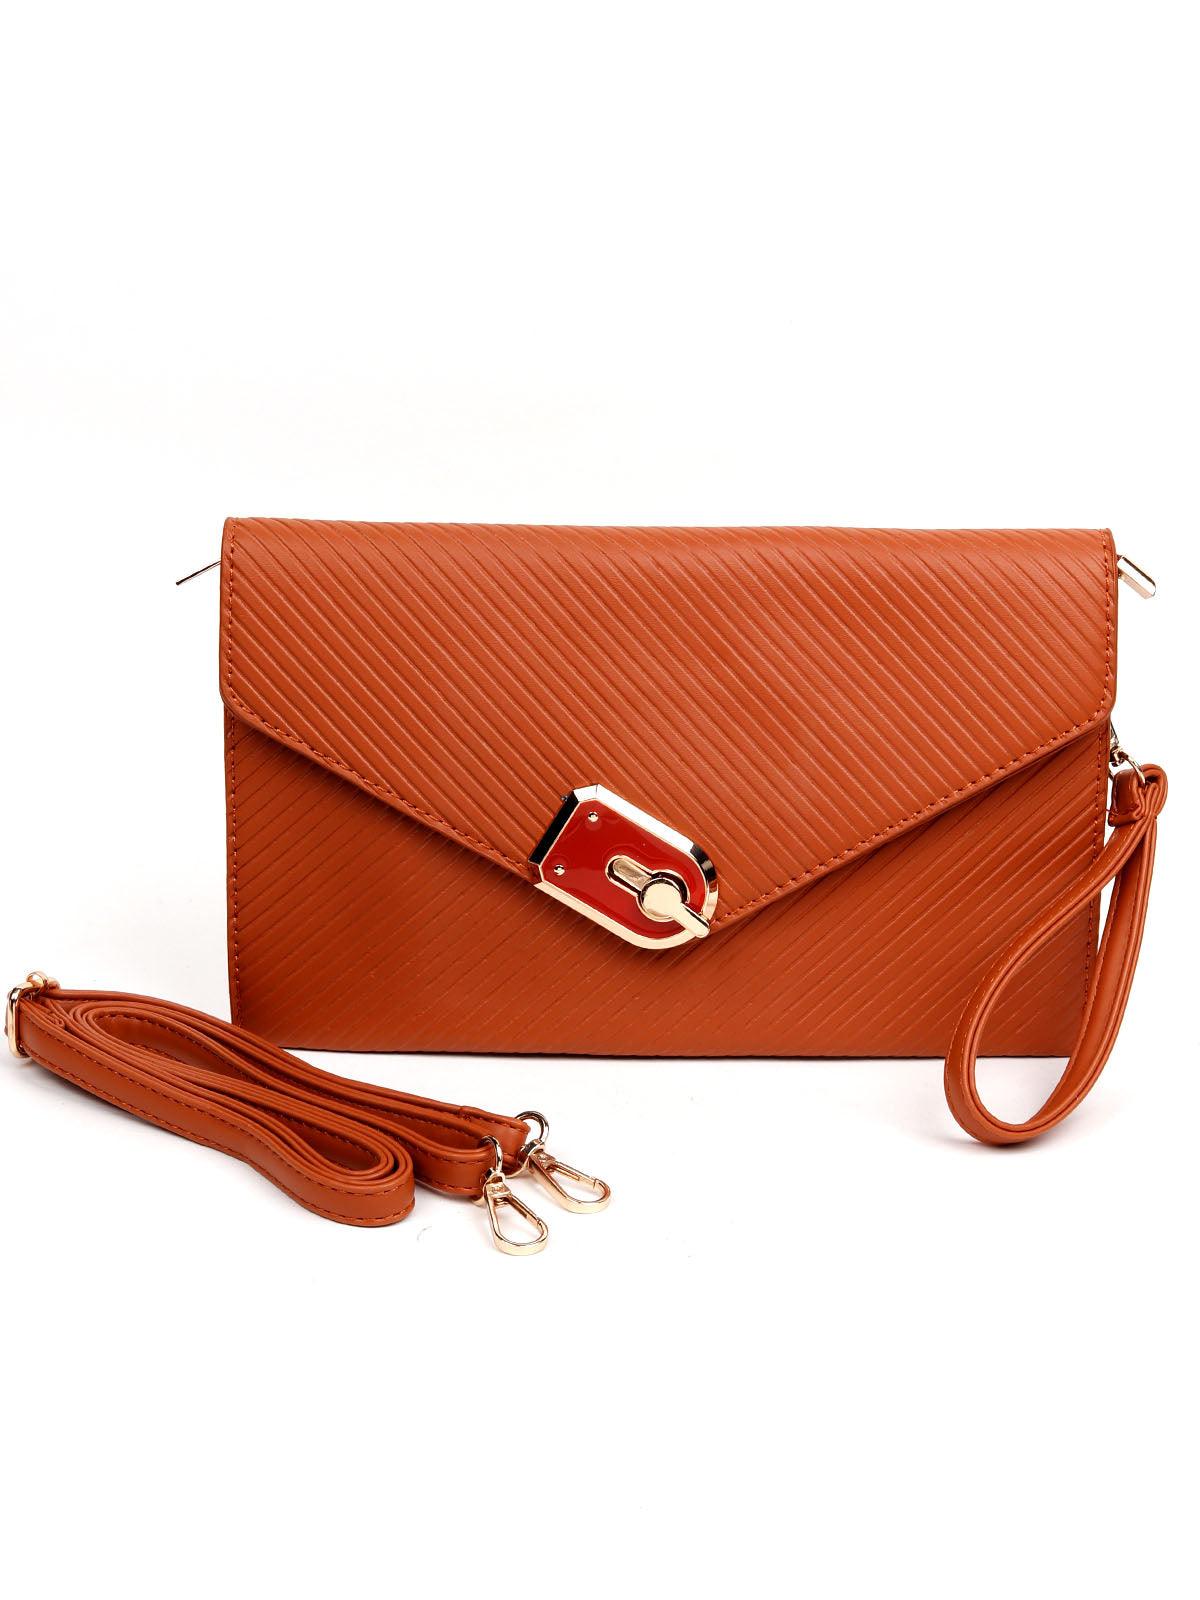 Stunning tan coloured envelope-shaped sling bag for women - Odette